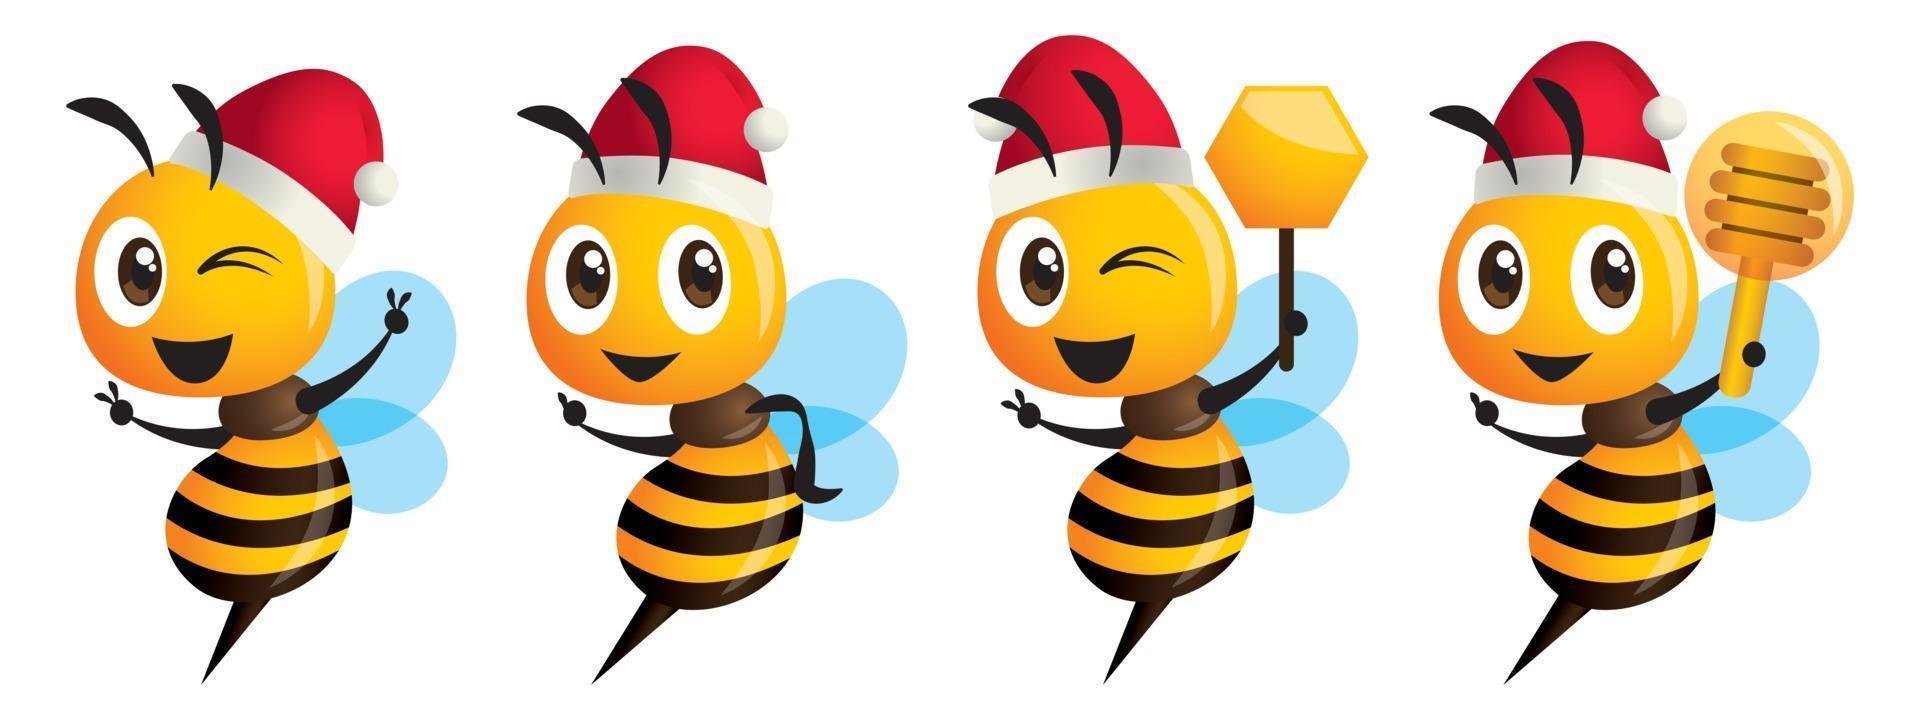 Conjunto de abelha fofa de desenho animado comemorando o mascote de feliz natal vetor